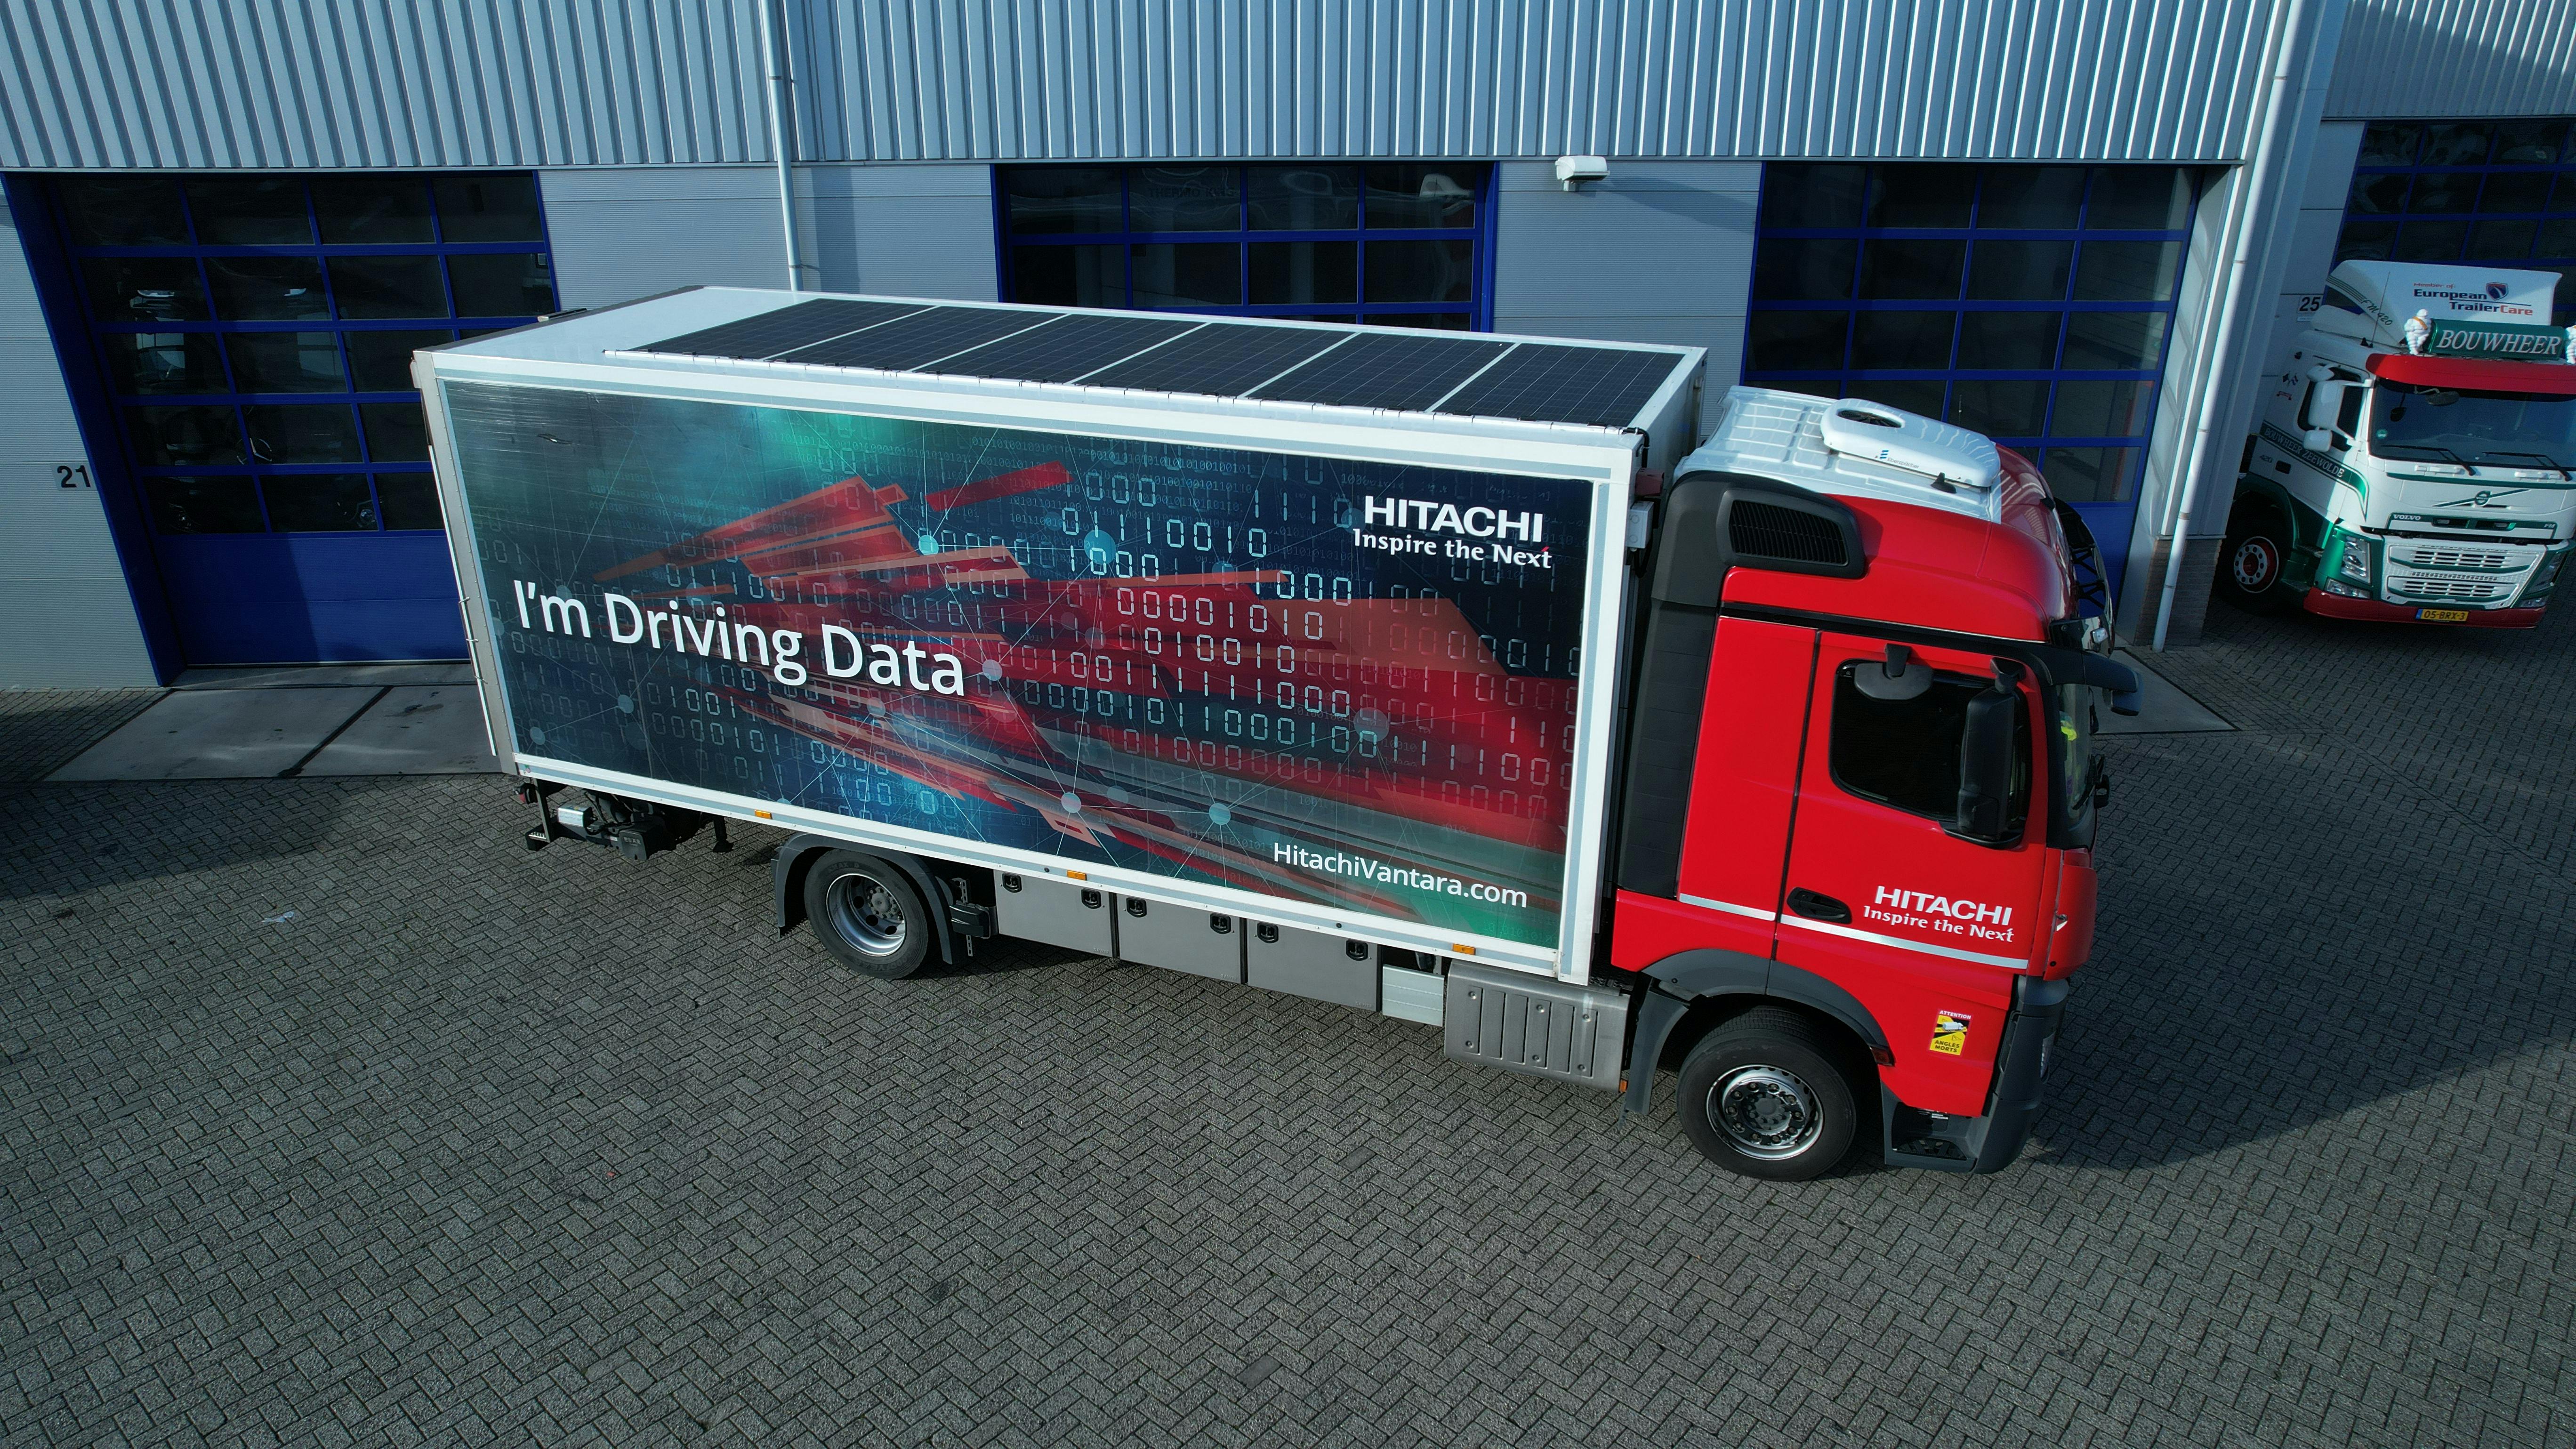 Hitachi Vantara powers its truck with solar panels through SolarOnTop 